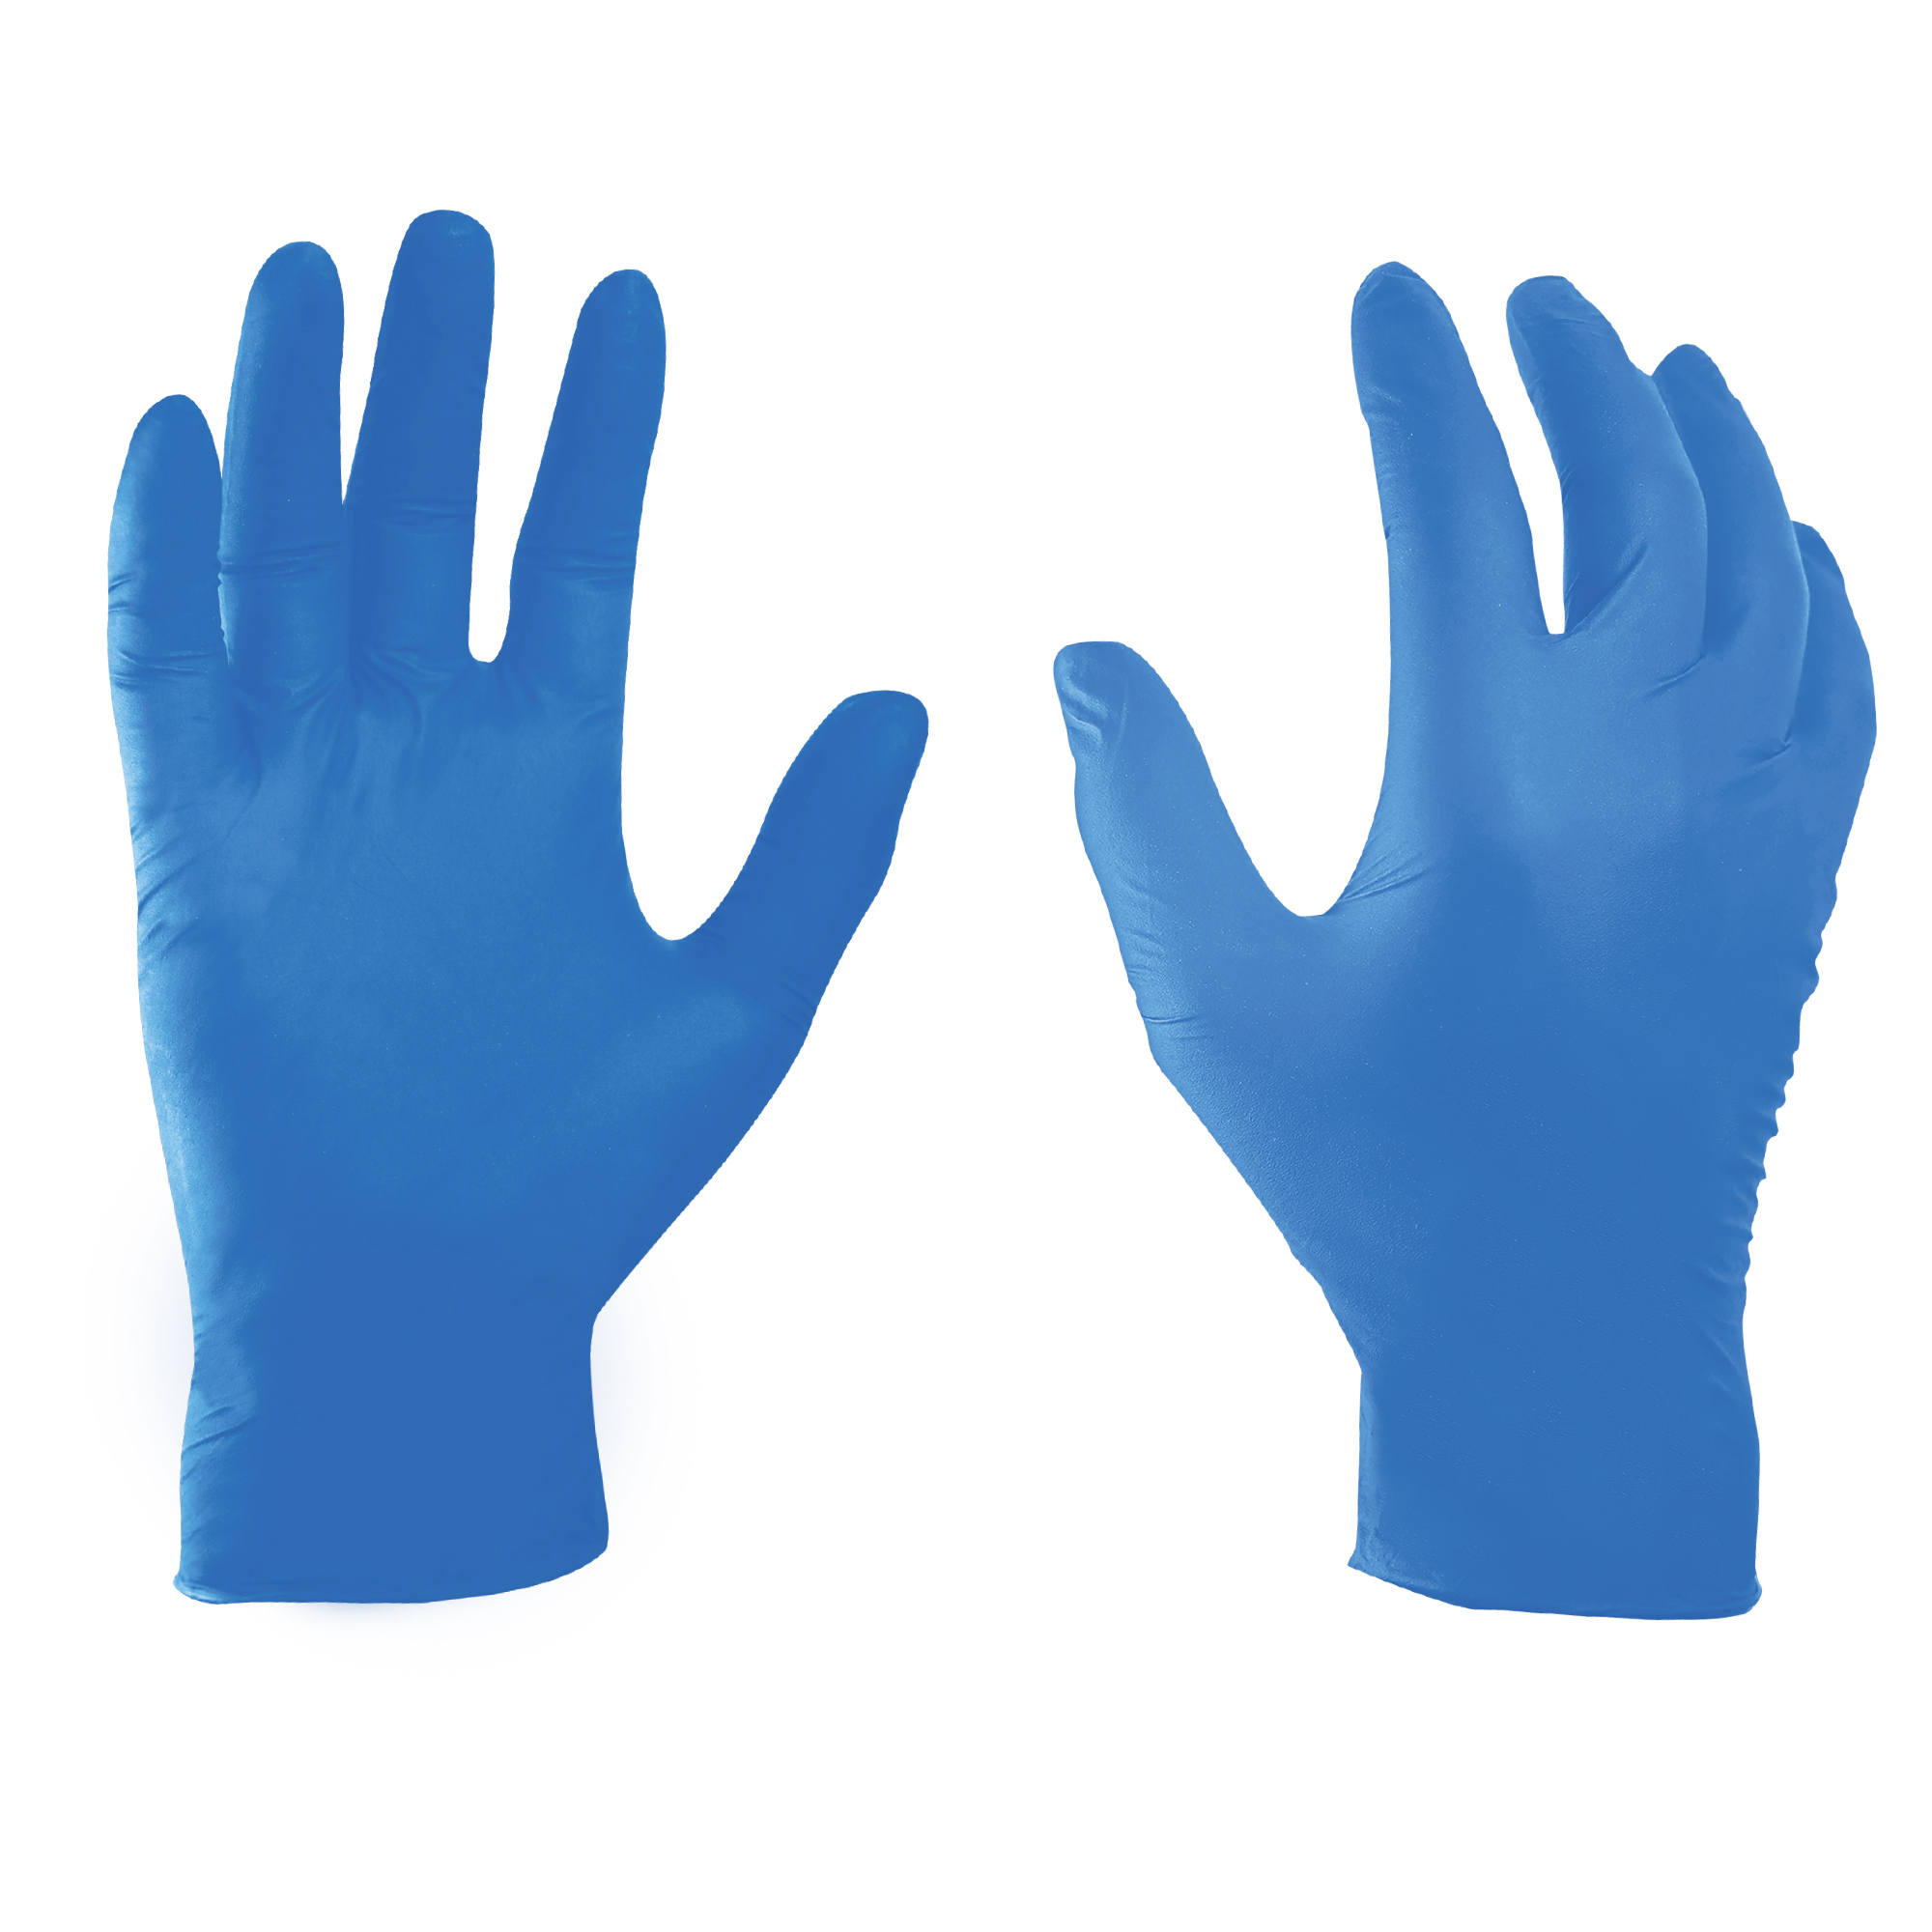 General Electric, 4mil Nitrile Blue Large Gloves 100pk, Size L, Color Blue, Included (qty.) 100 Model GG600L